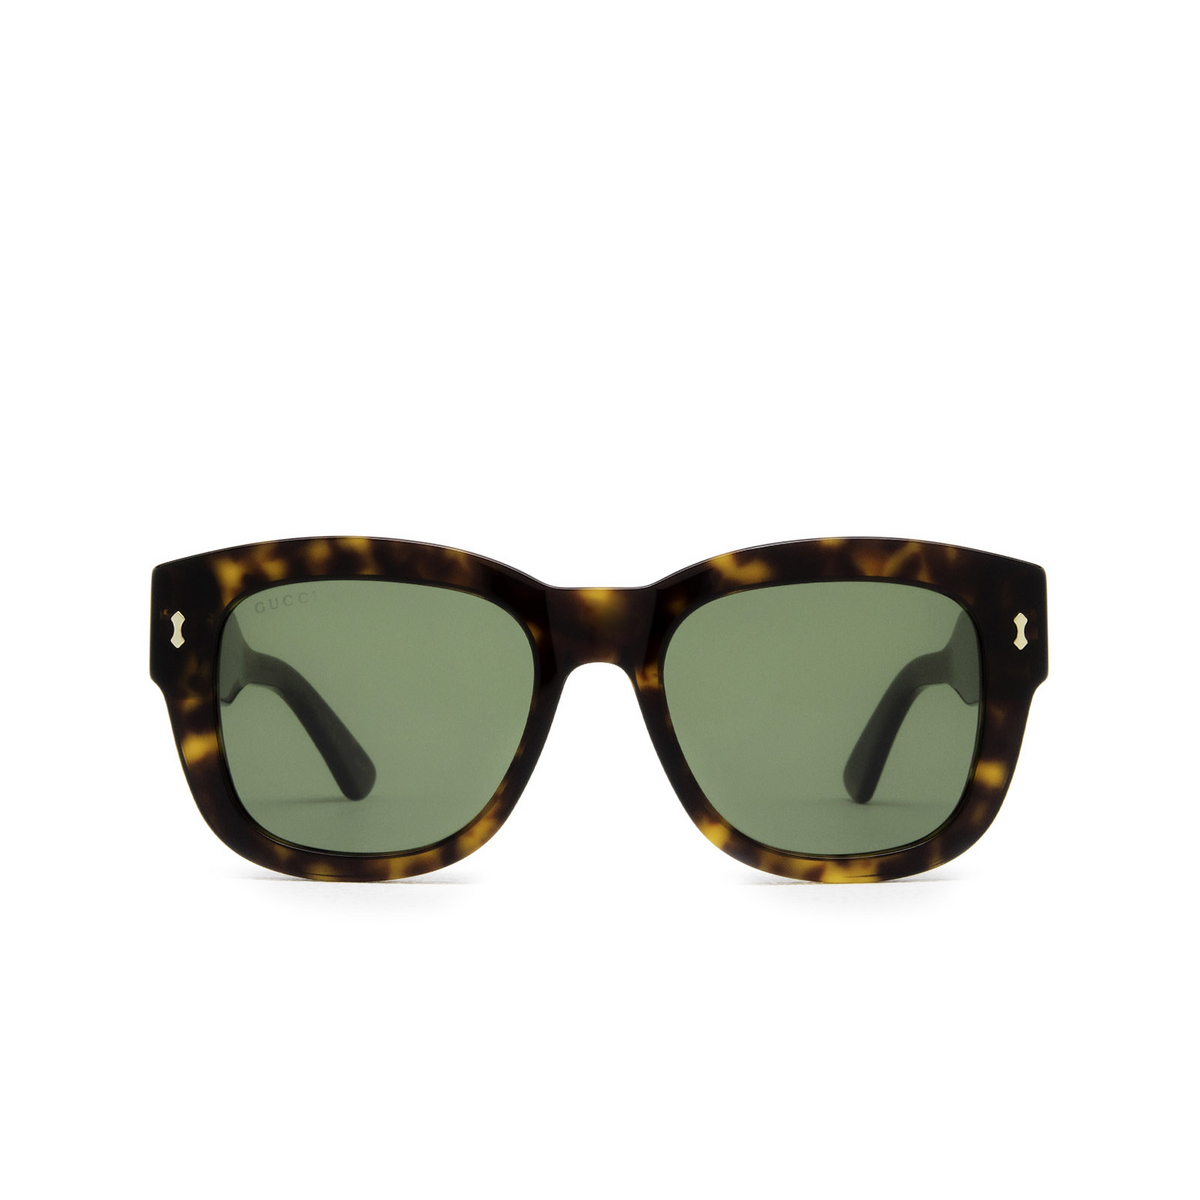 Gucci® Square Sunglasses: GG1110S color Havana 002 - front view.